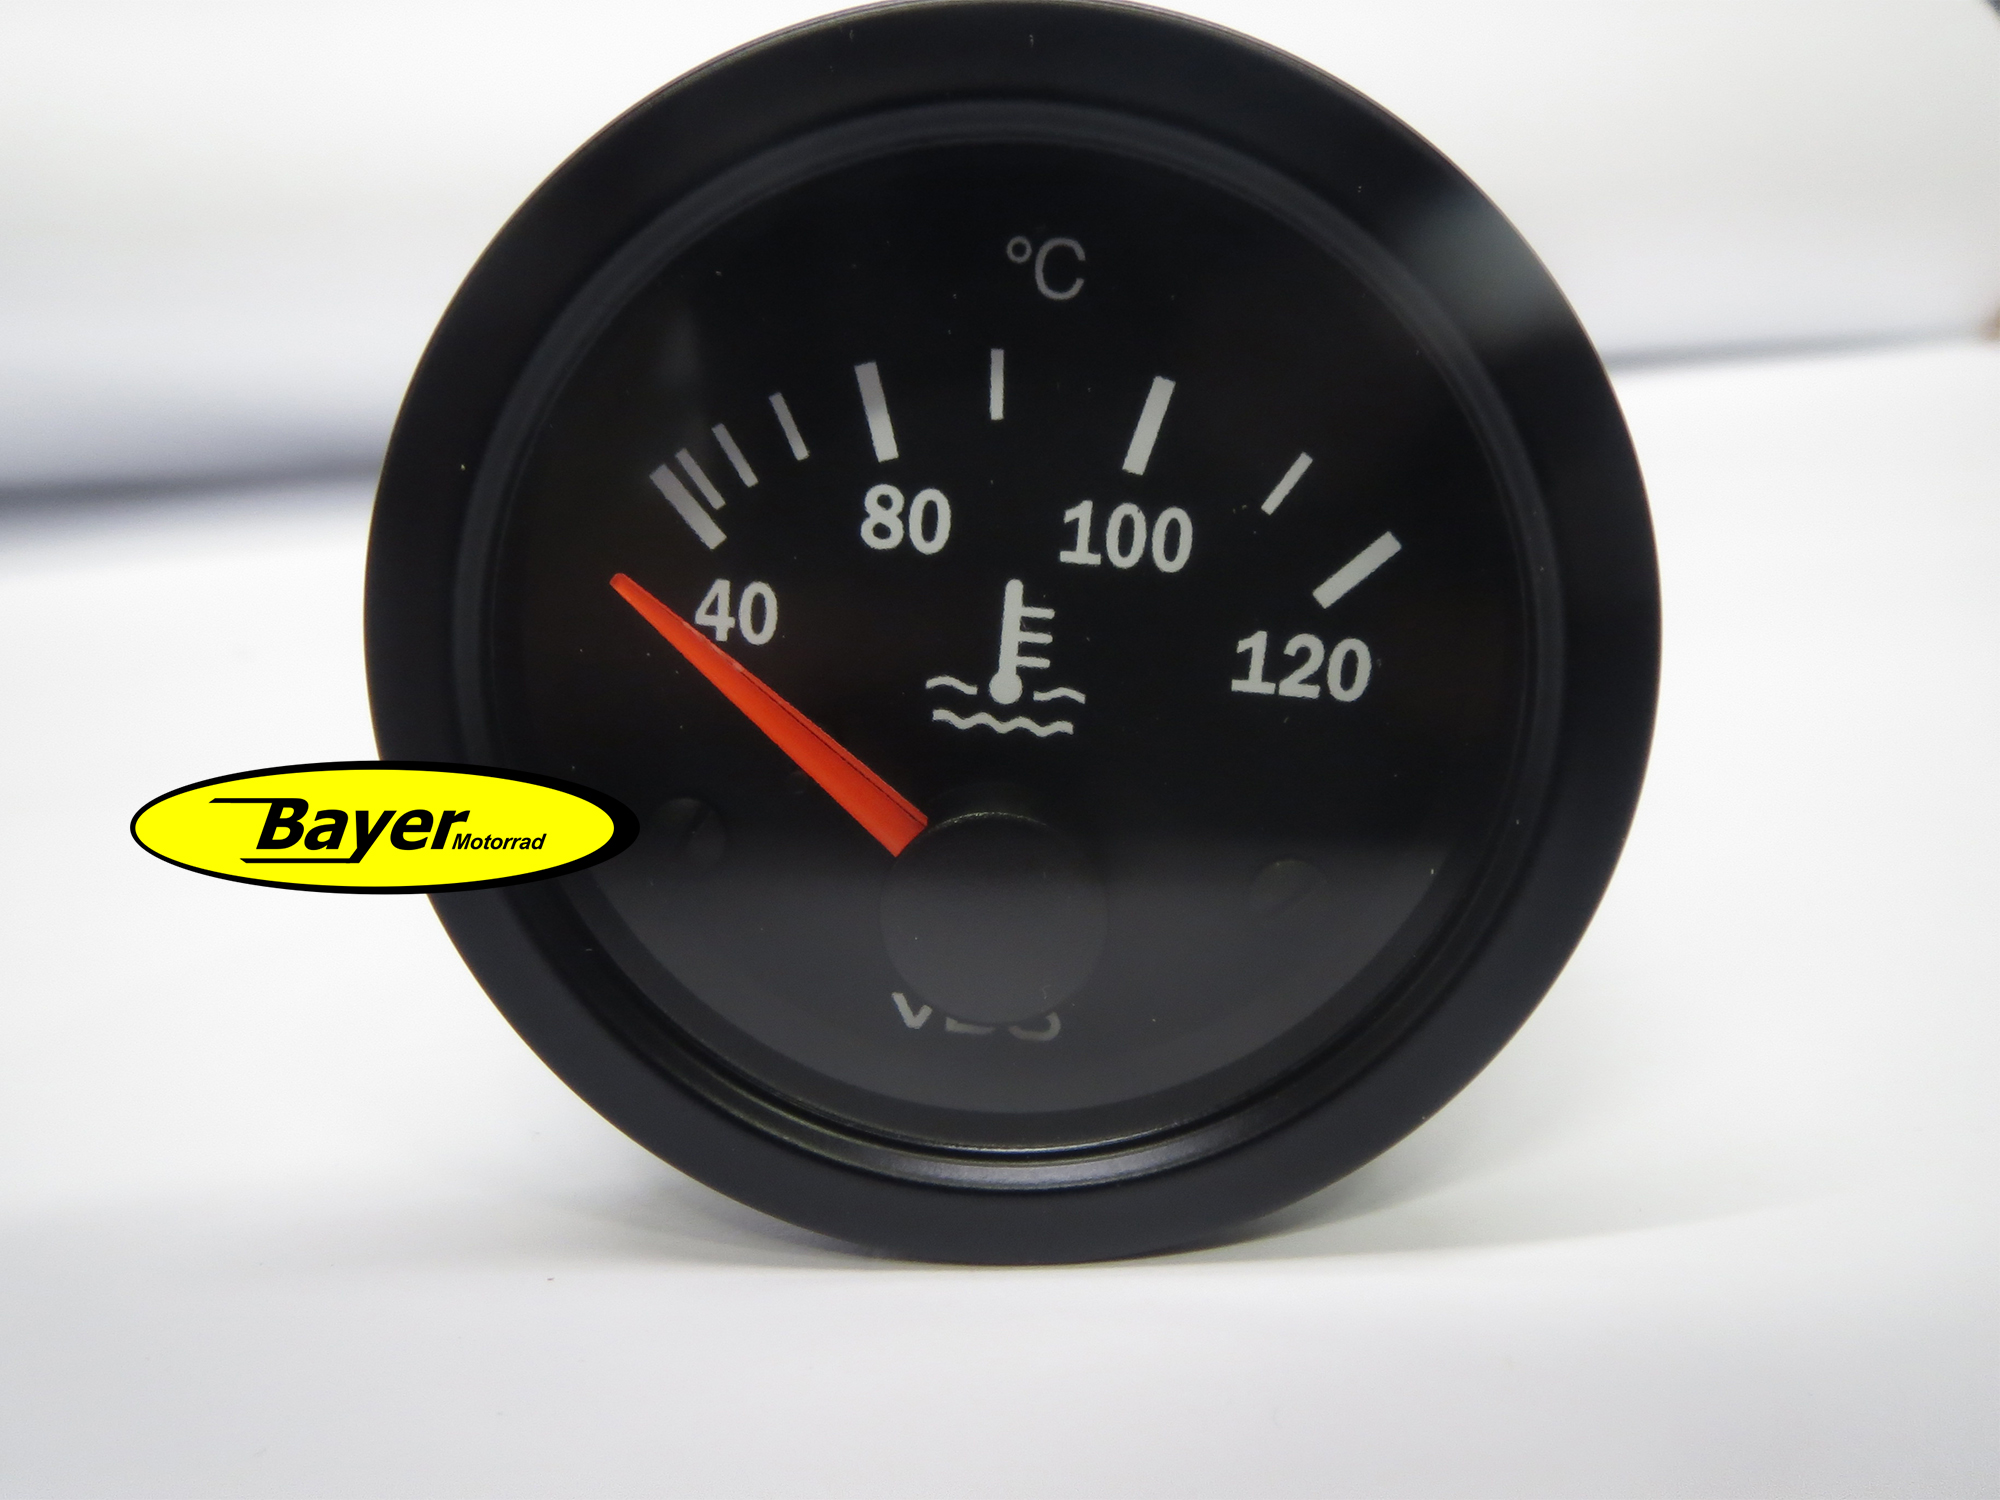 Universal Motorrad LCD Digital Tachometer Tachometer Meter Tacho Anzeige